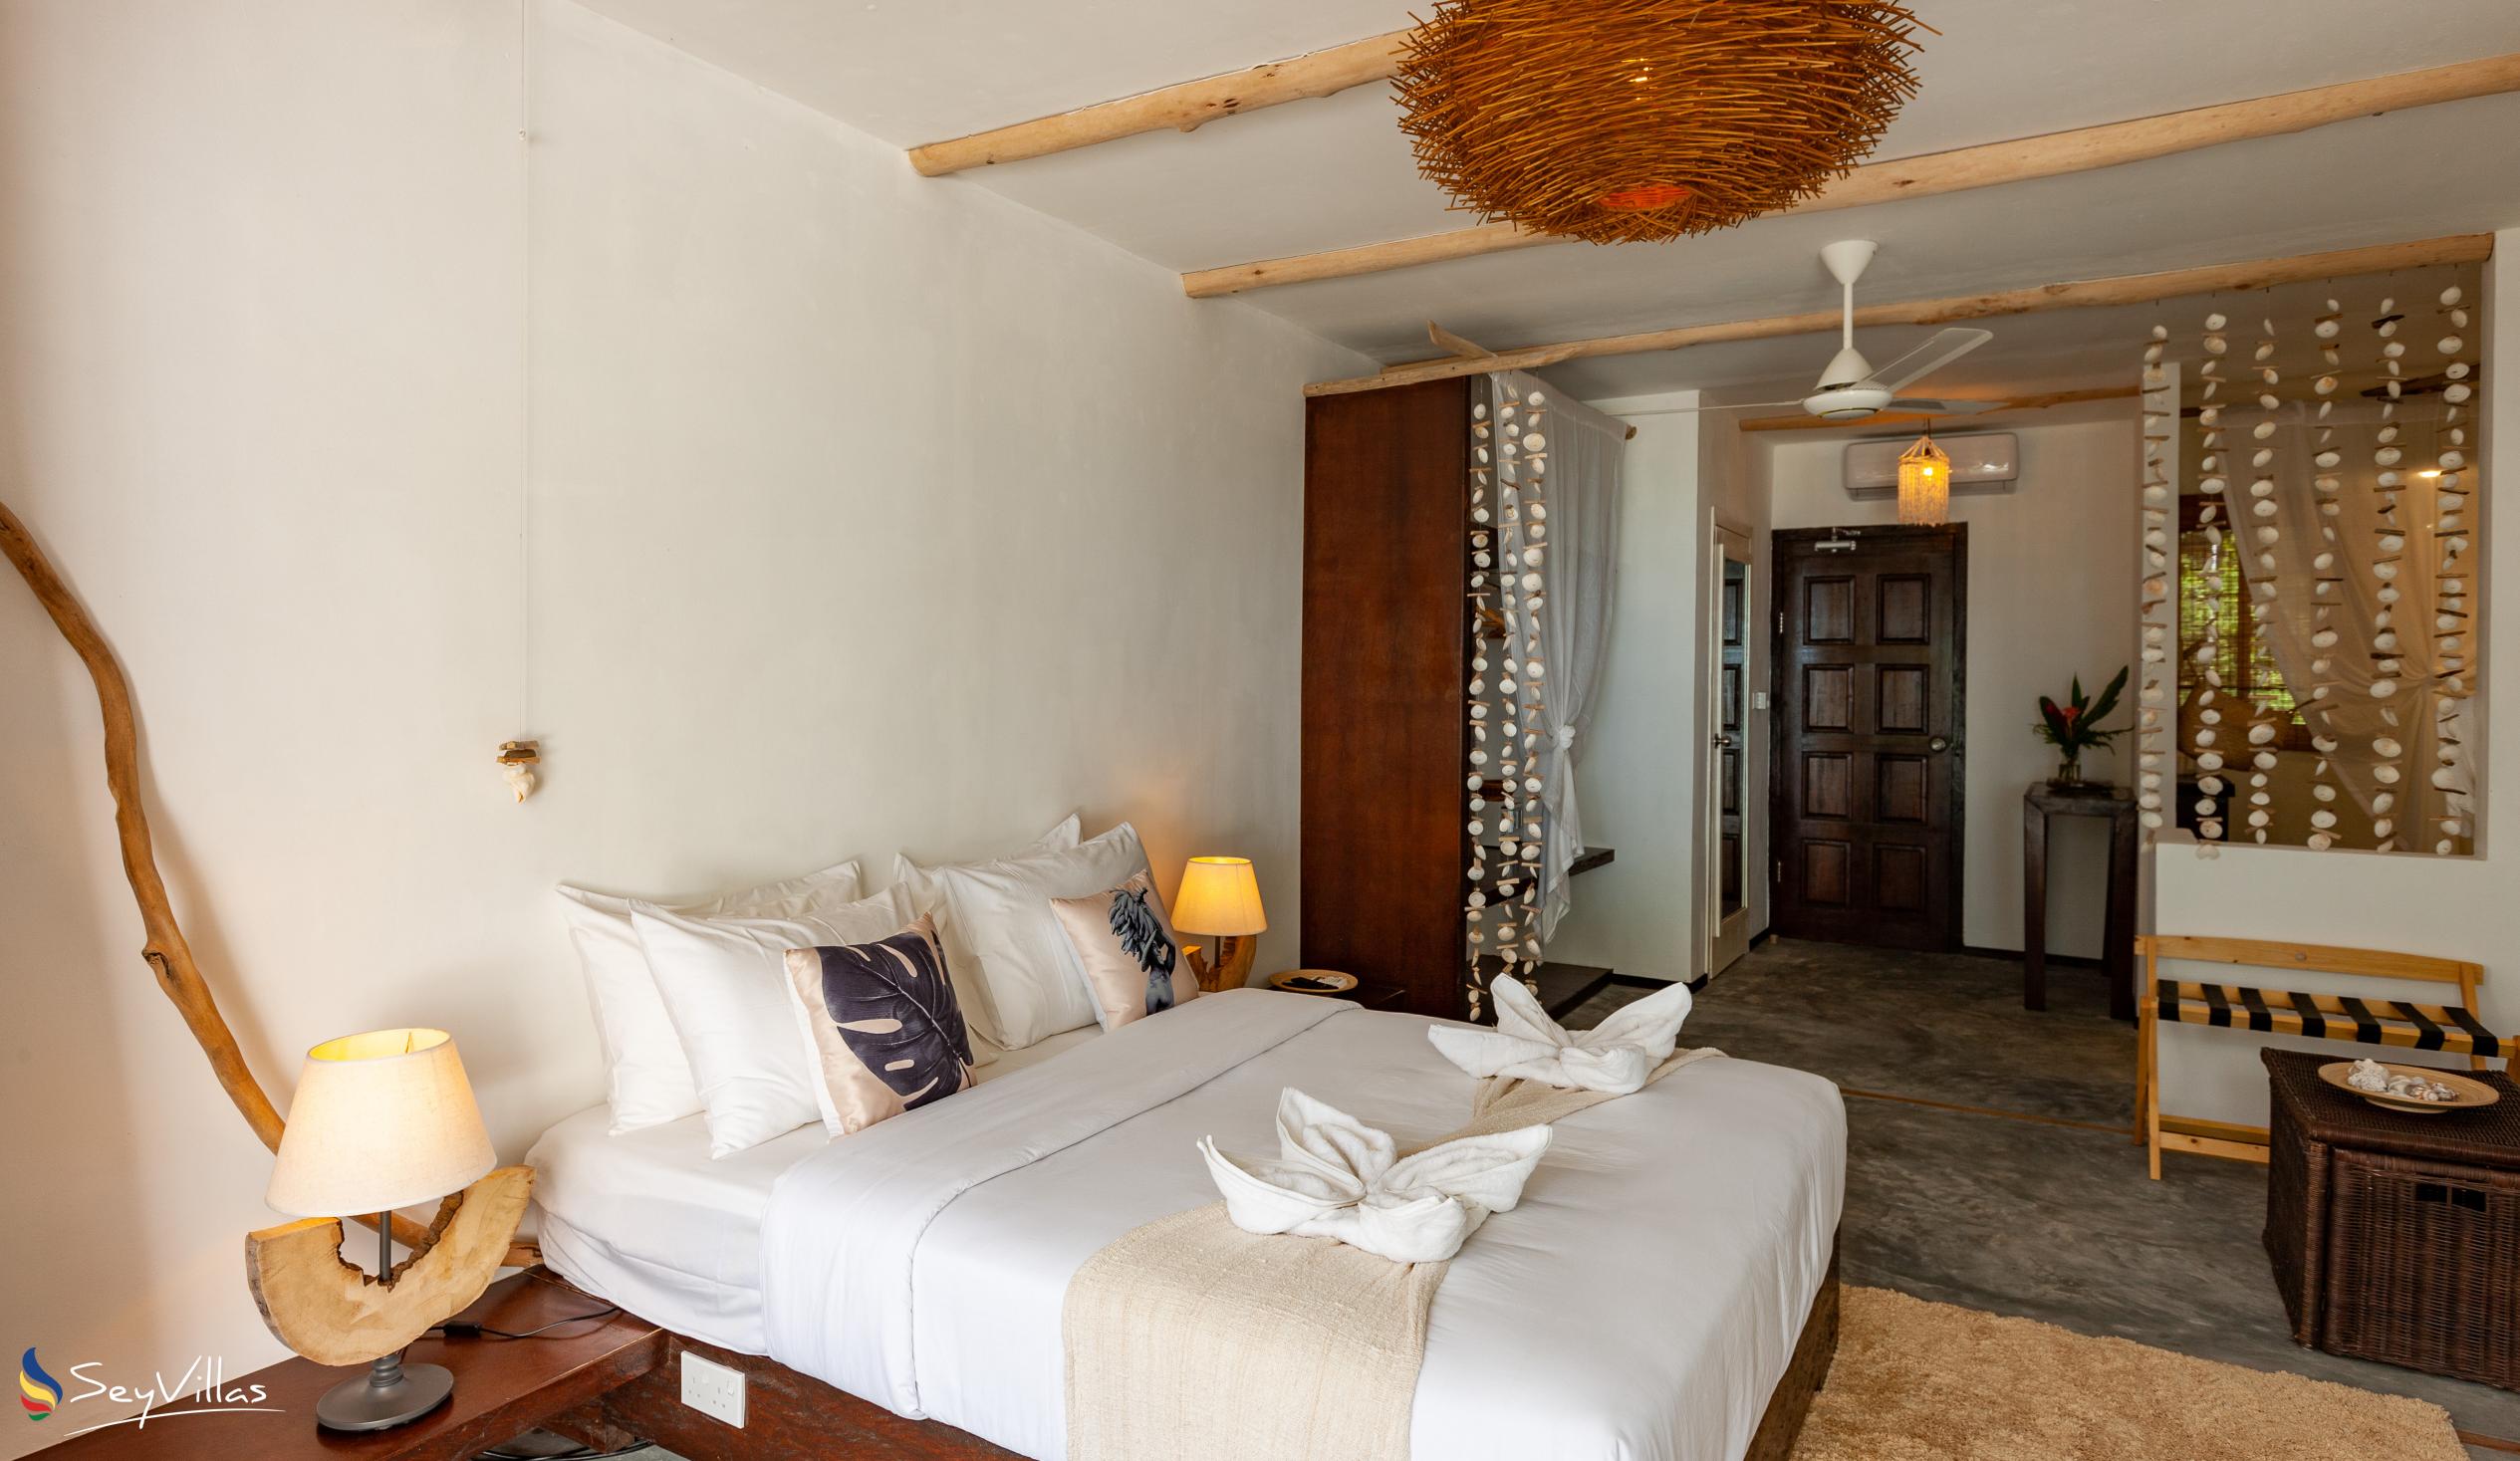 Photo 137: Bliss Hotel Praslin - Beach House - Beach Superior Room - Praslin (Seychelles)